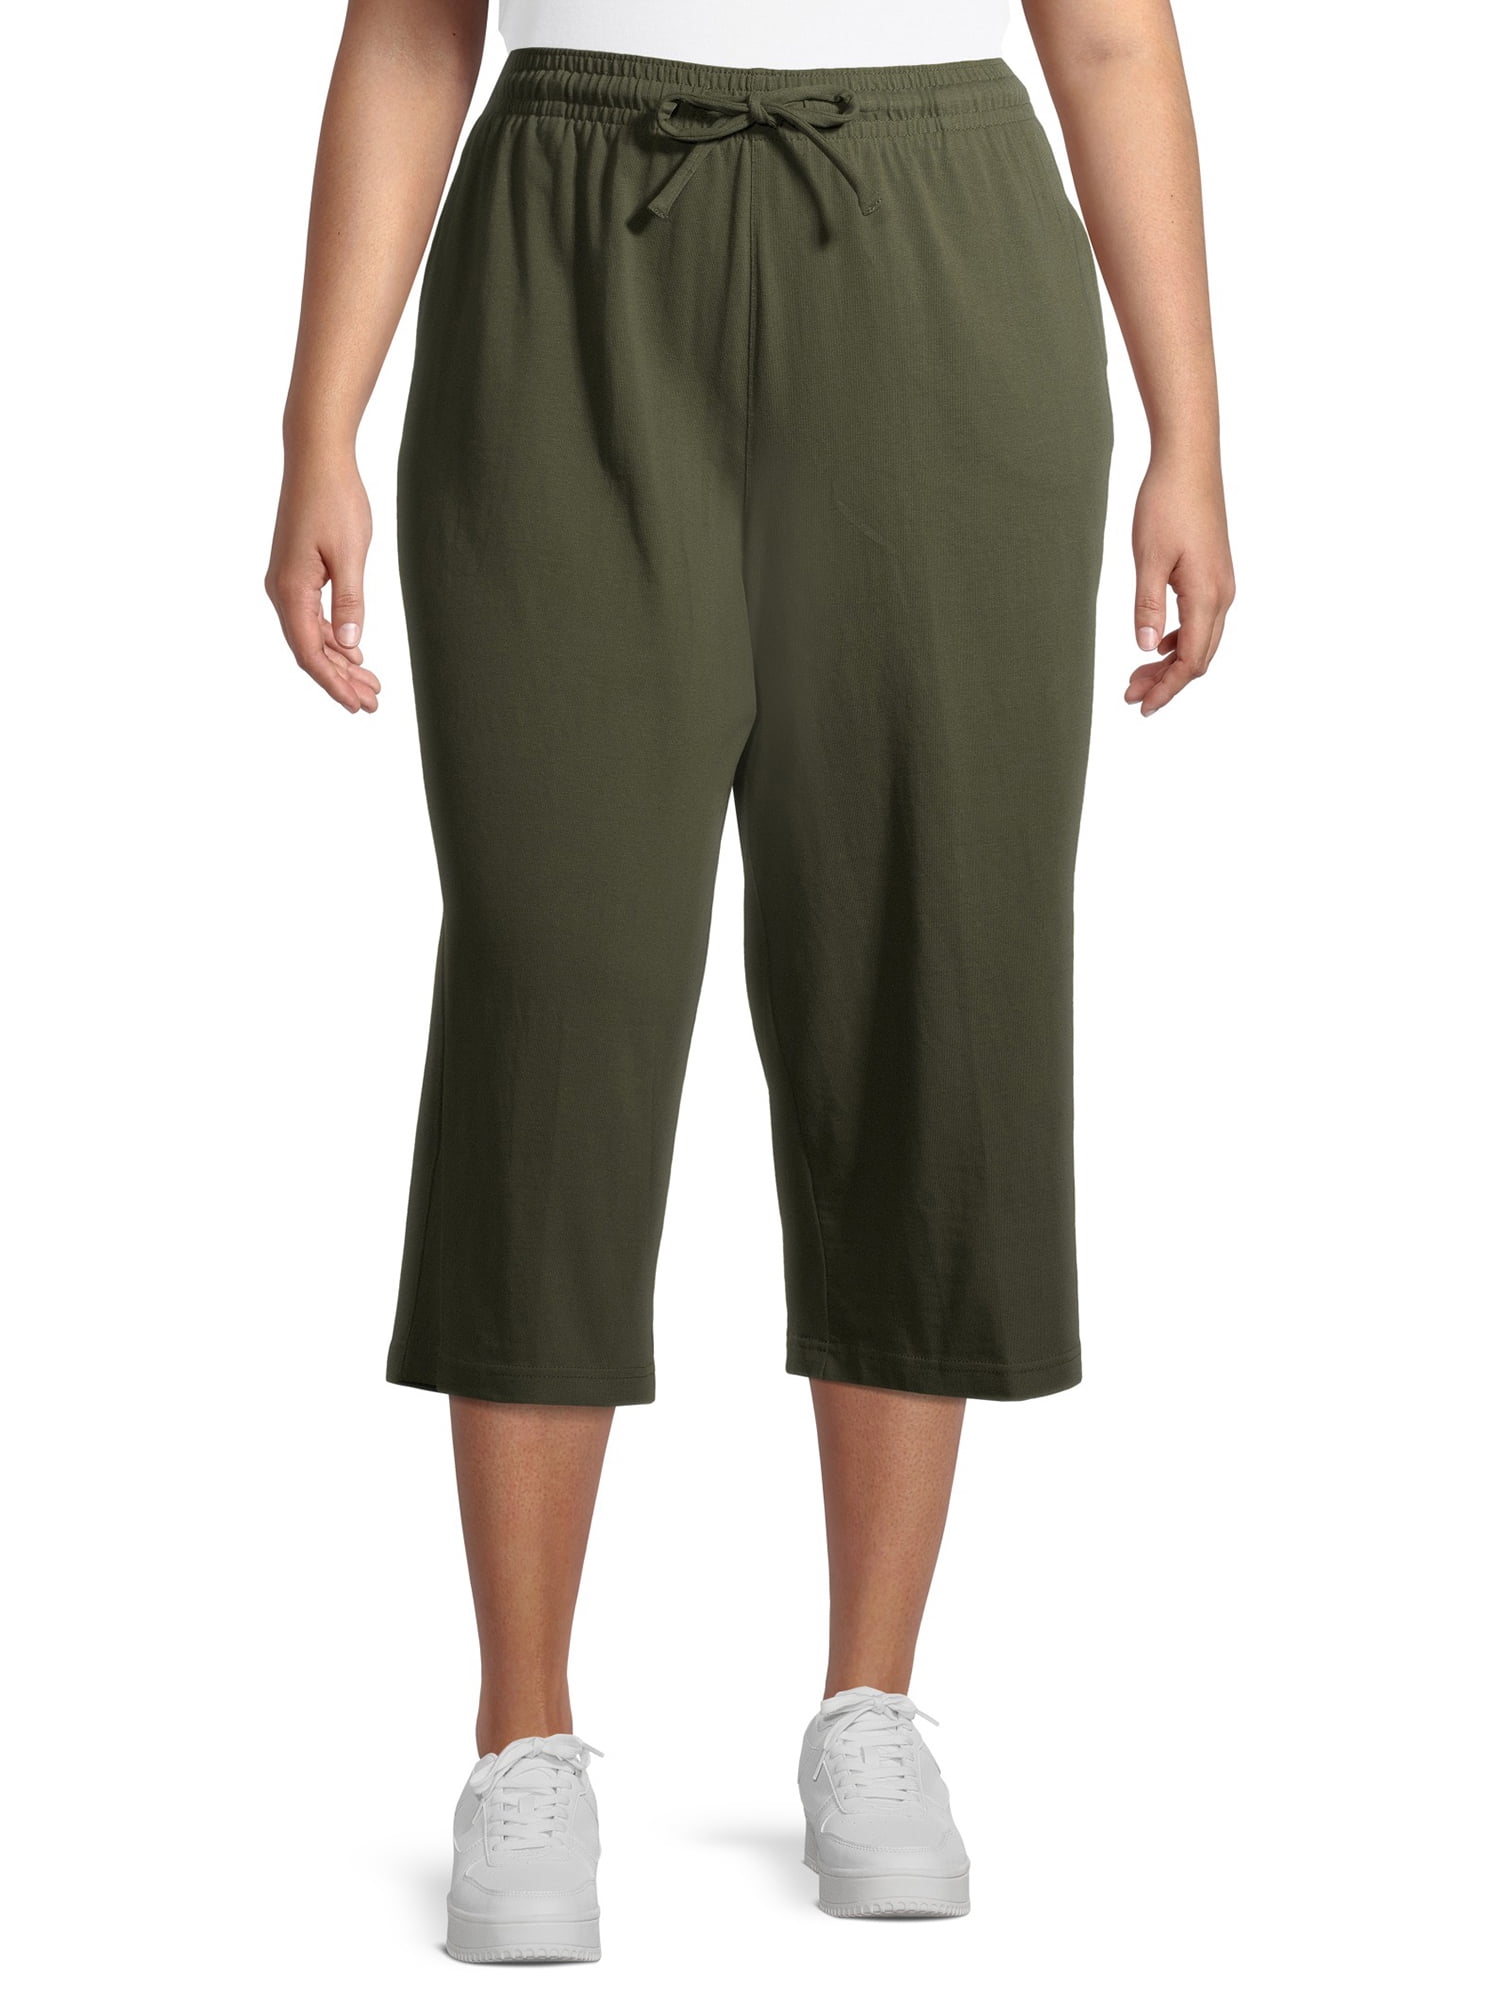 Terra & Sky Women's Plus Size Knit Capri Pant - Walmart.com